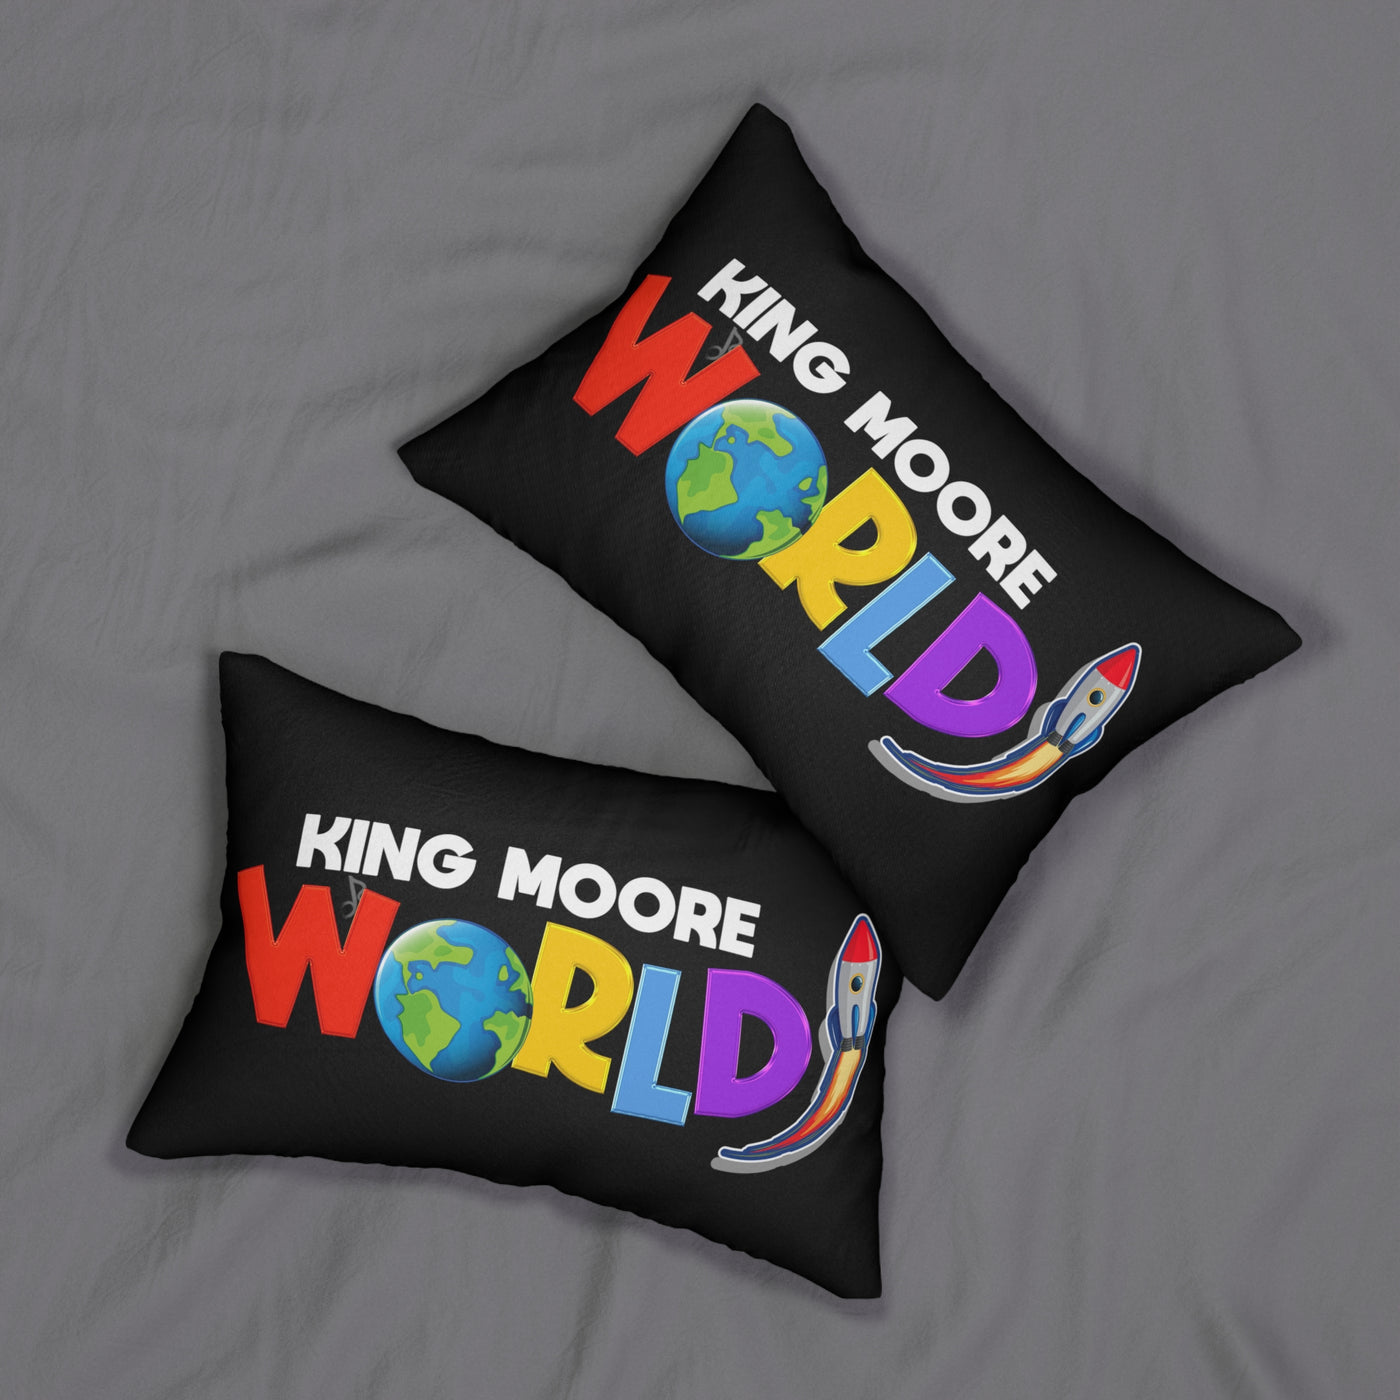 King Moore World Lumbar Pillow (Black)